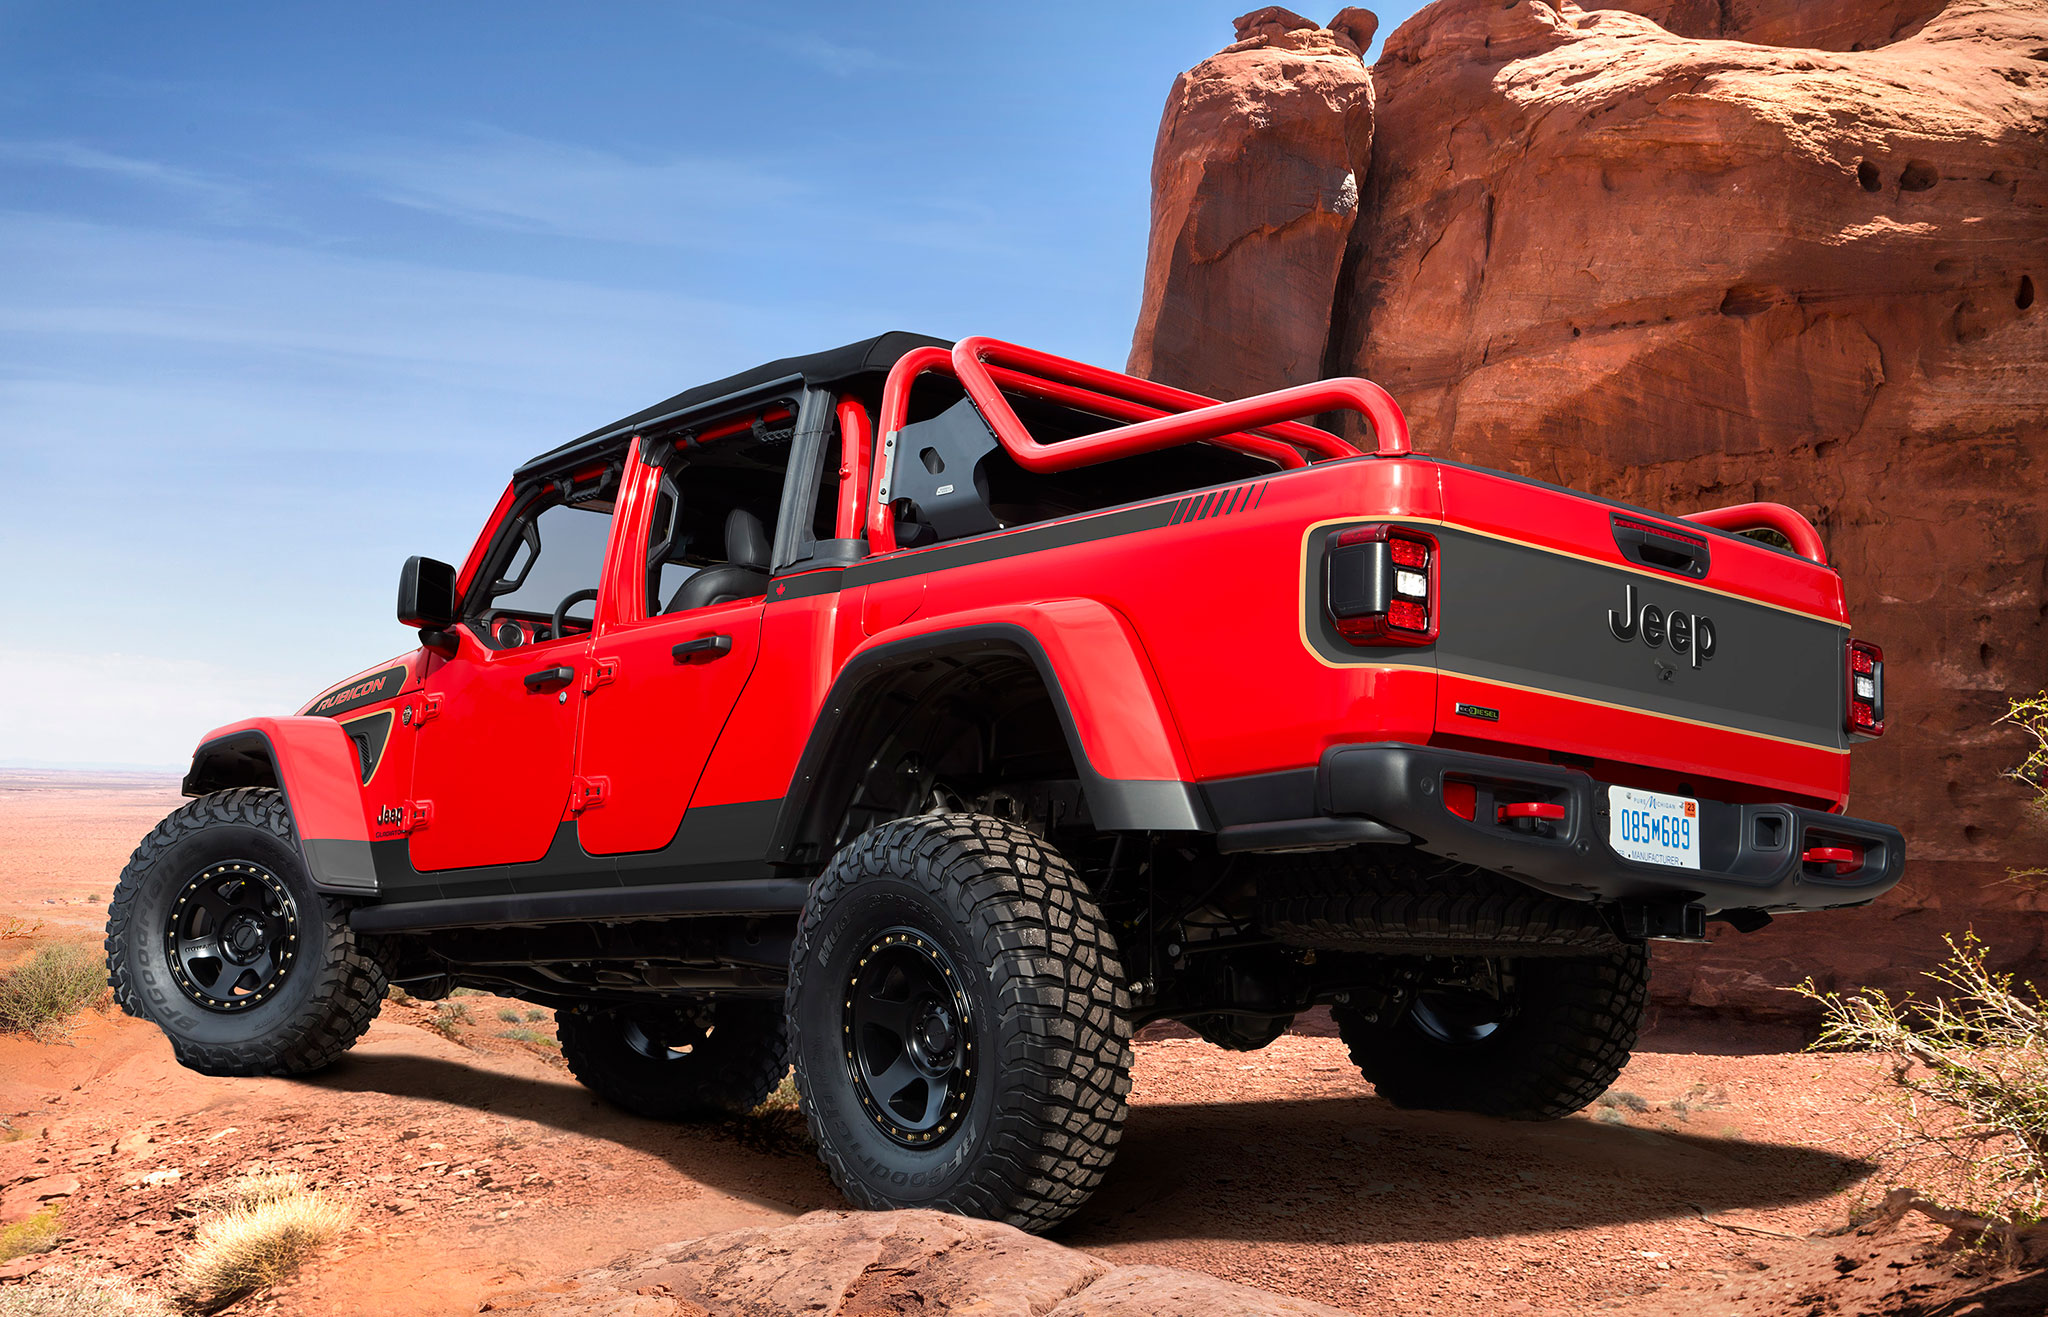 2021 Jeep Red Bare Gladiator Rubicon Concept trois quarts arrière gauche - Concept Cars de Jeep®.